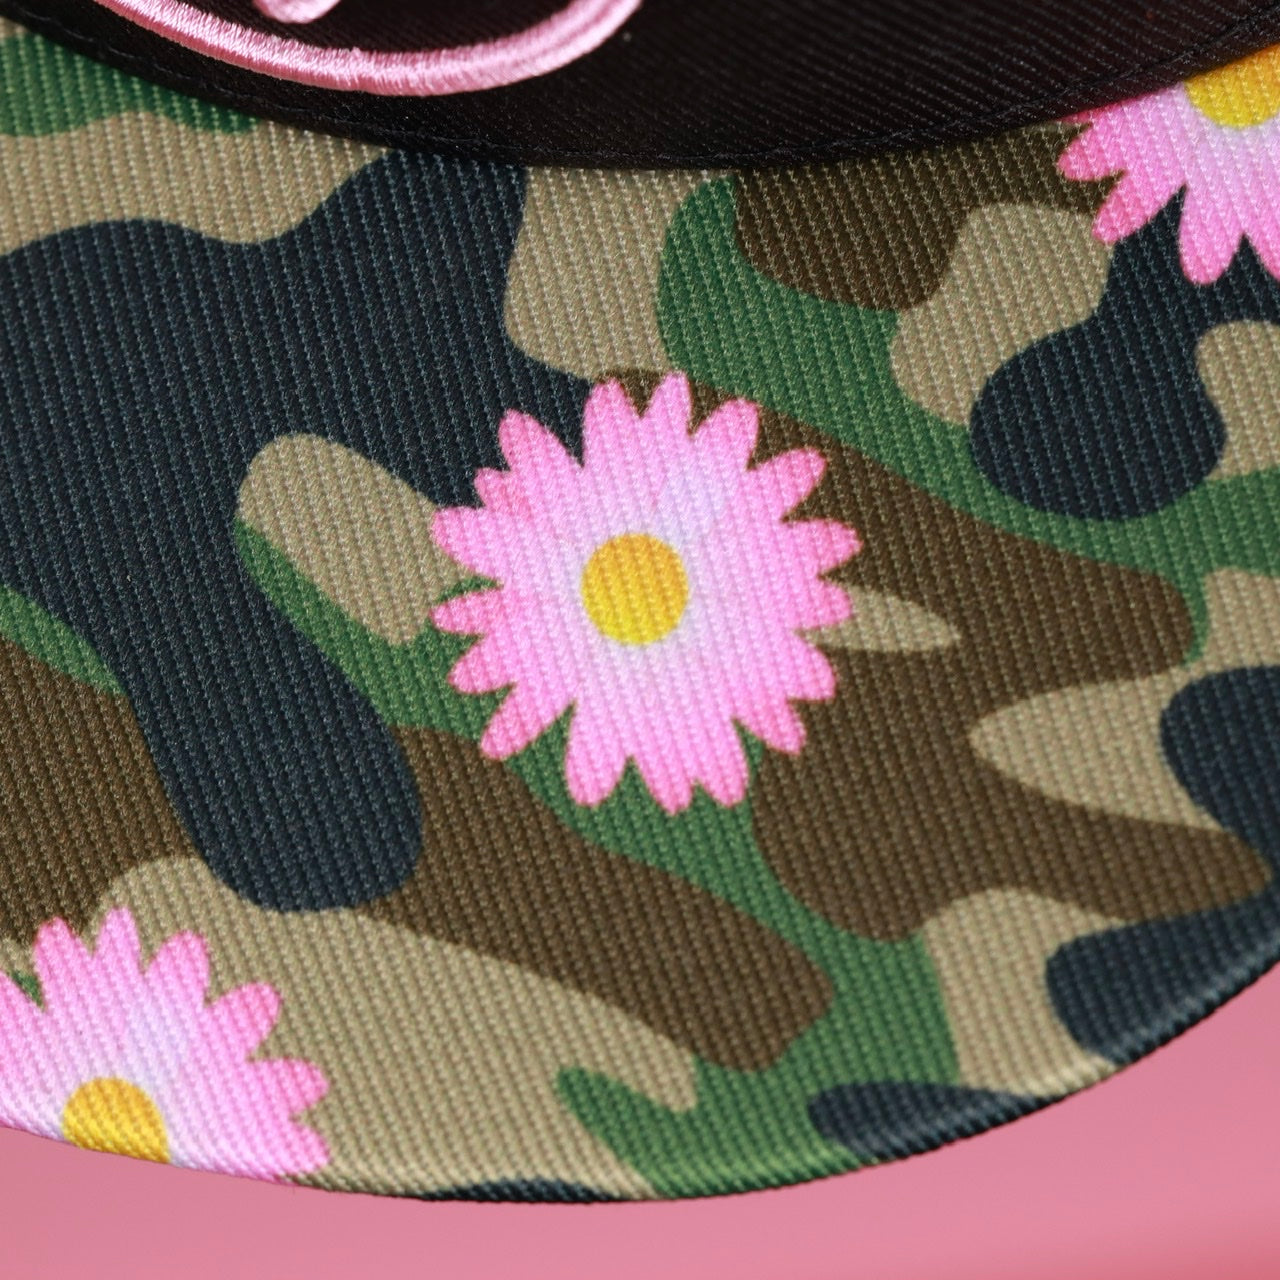 Flat Bill Snapback Hat Pink Flower Camo